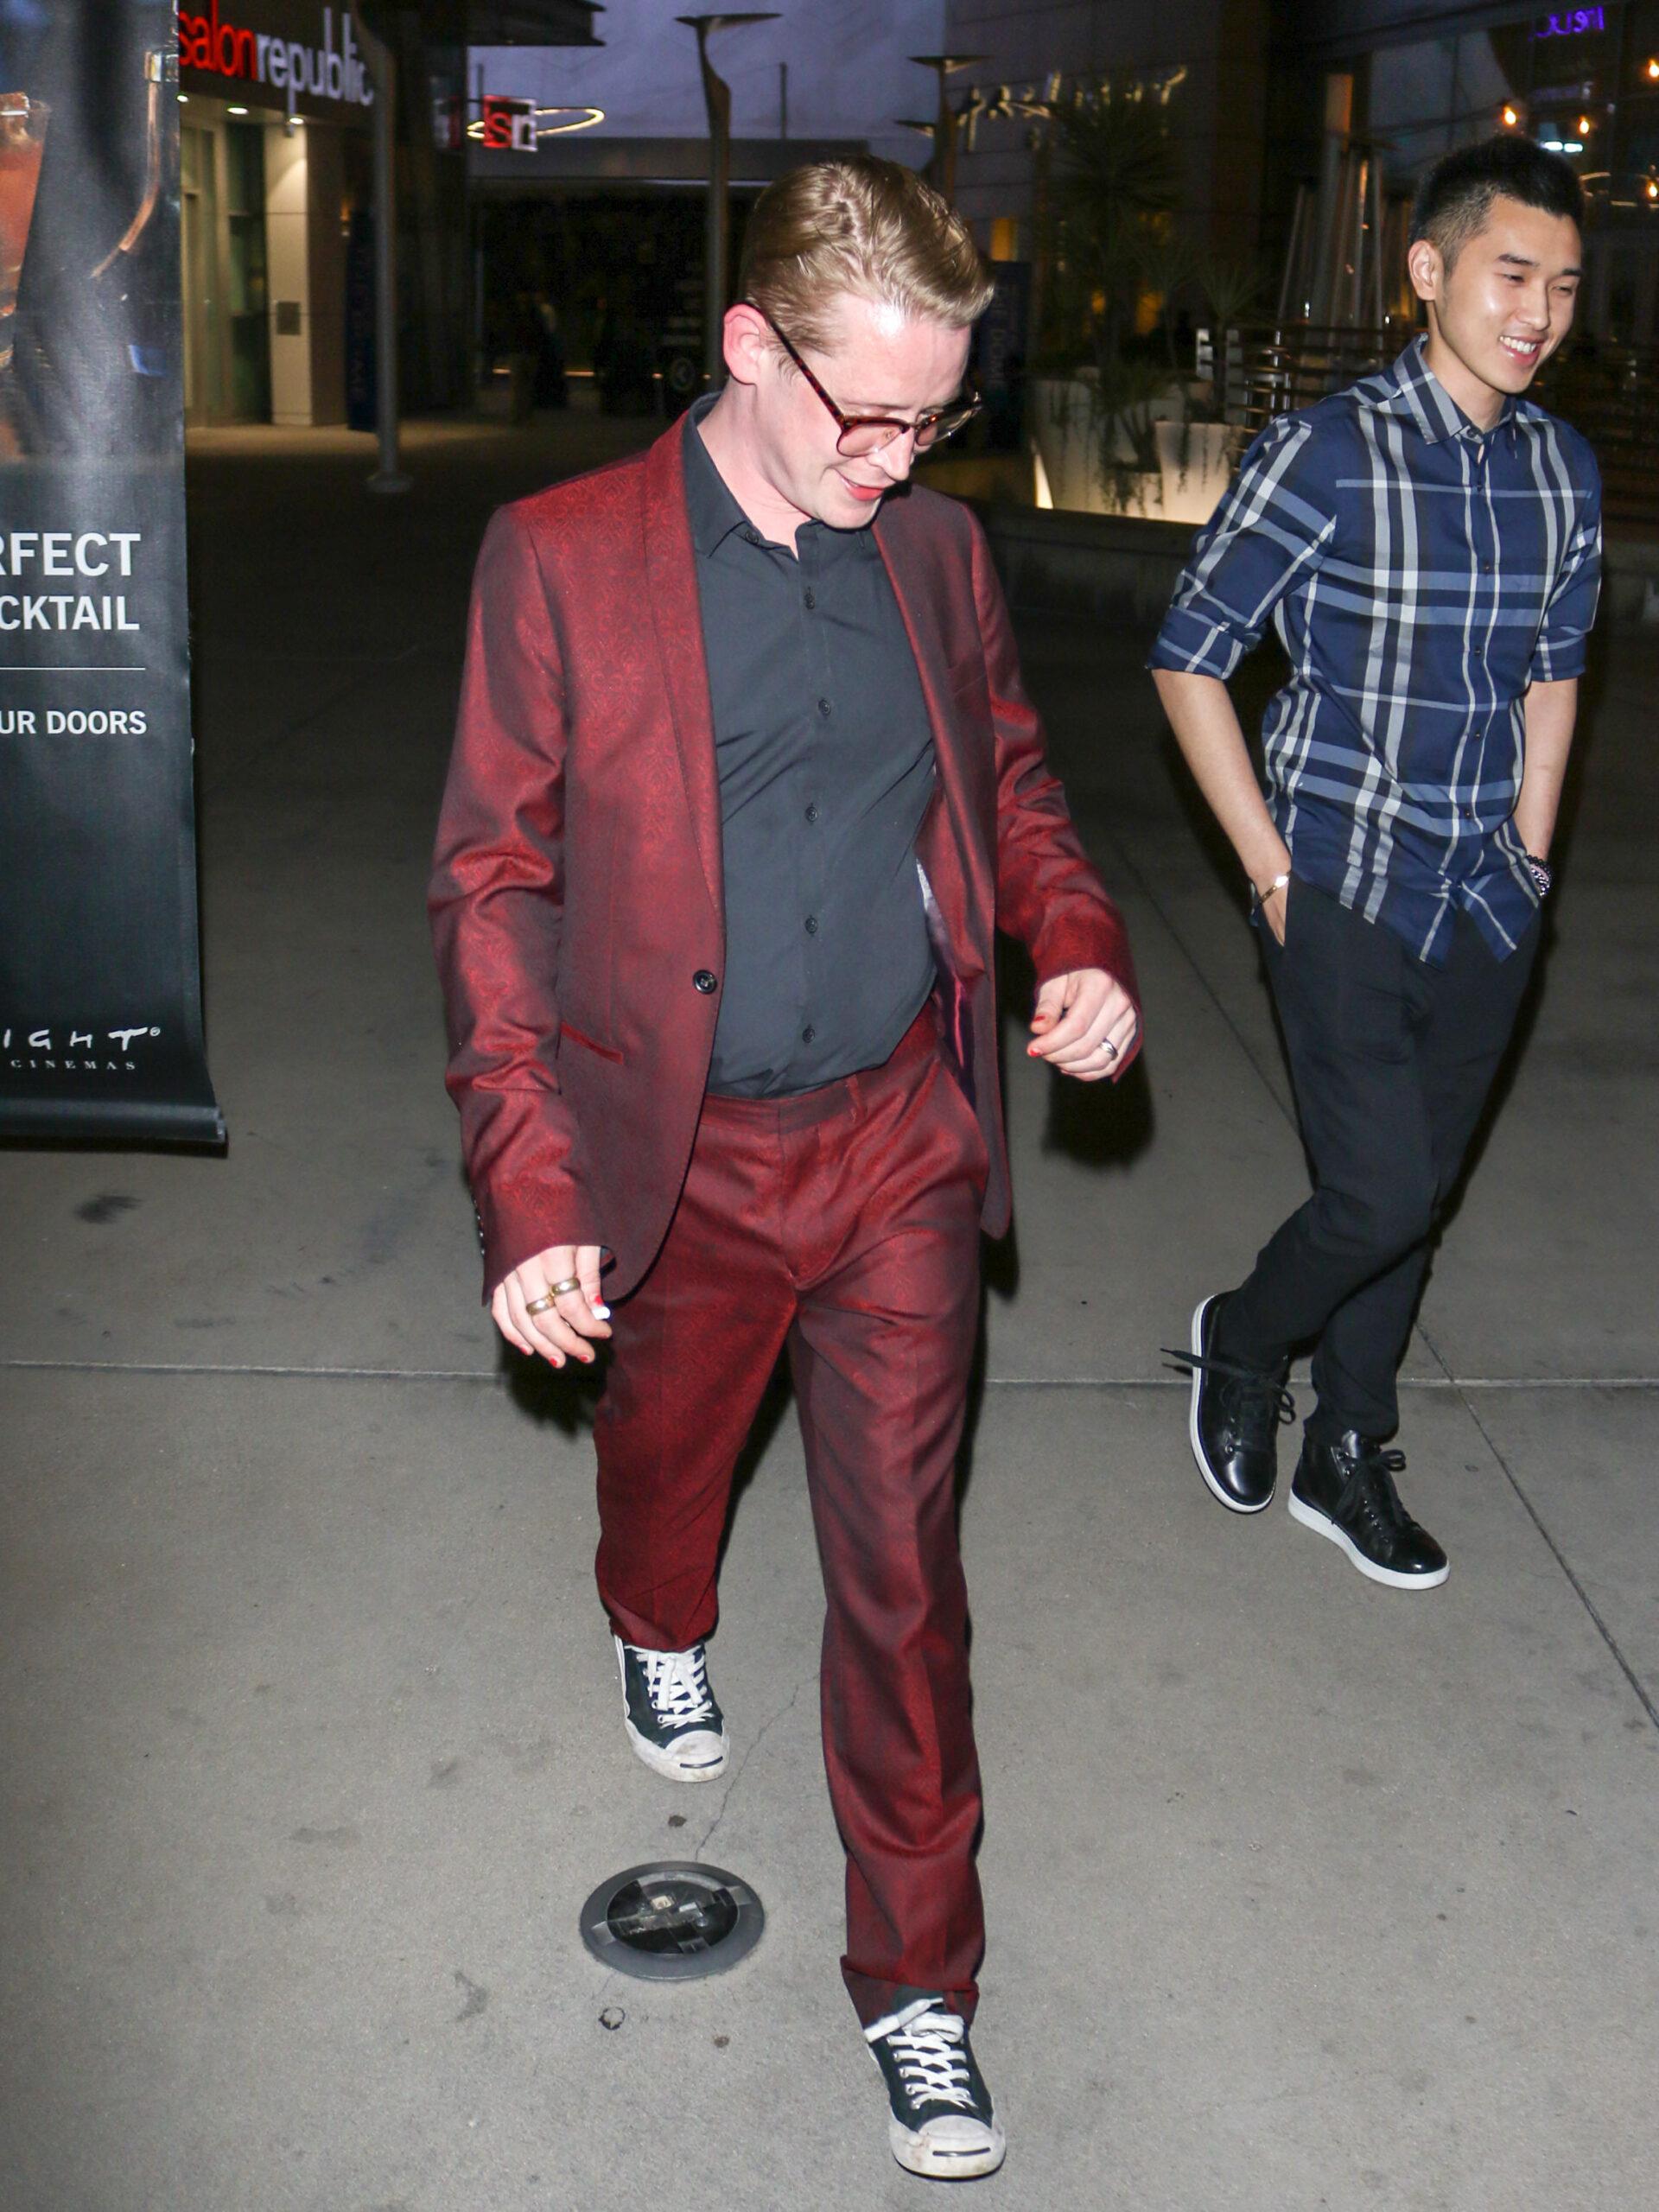 Macaulay Culkin is seen in Los Angeles